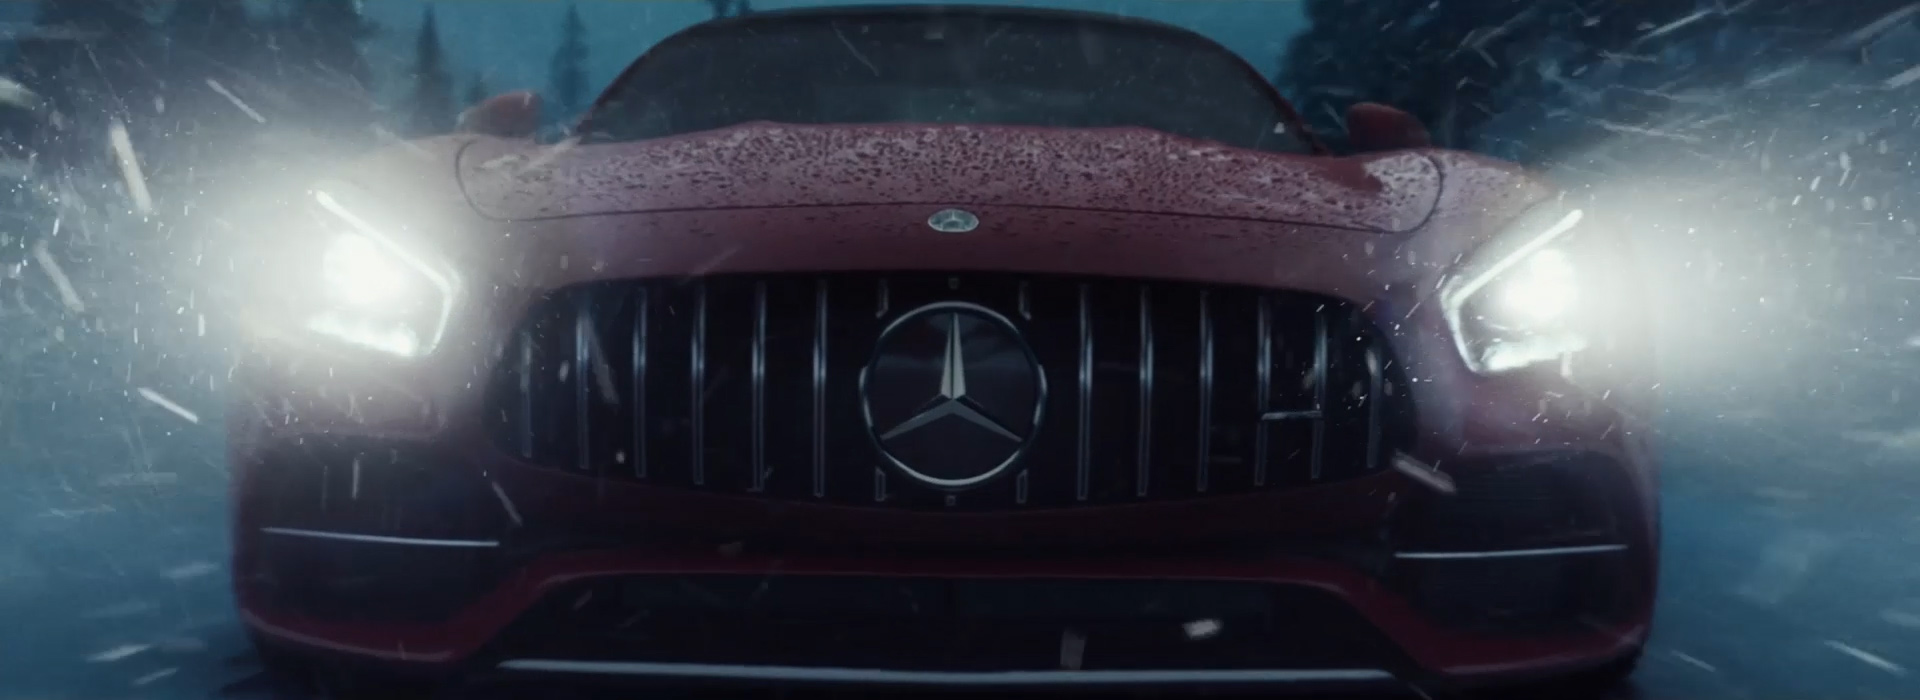 Mercedes-Benz 2017 Winter Event Commercial – "Pit Stop"